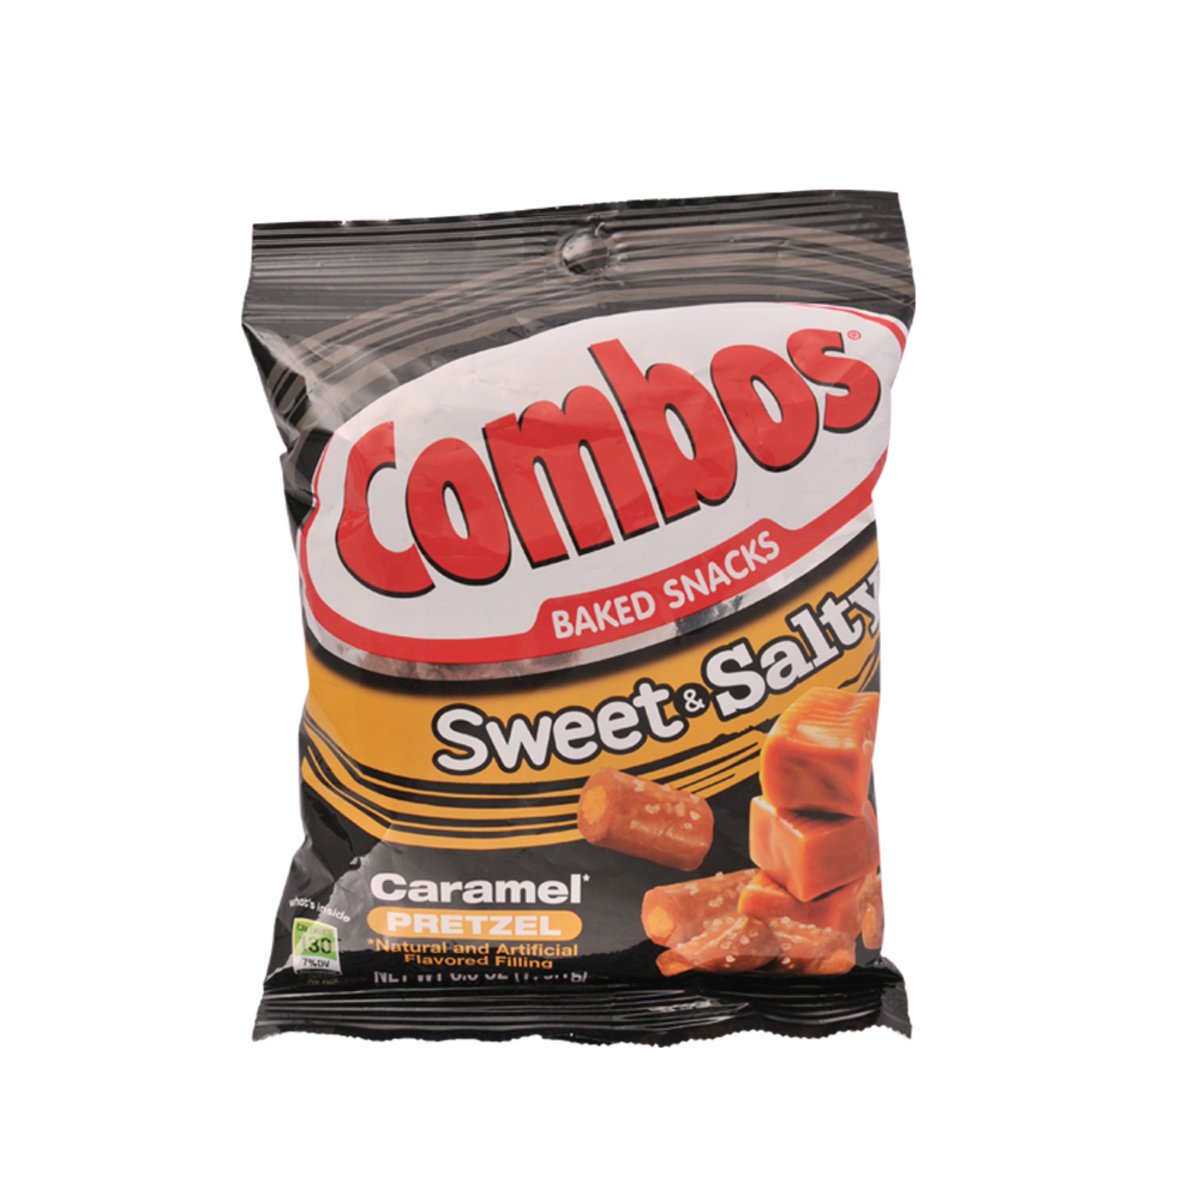 Combos Sweet & Salty Caramel Pretzel Baked Snacks 170g